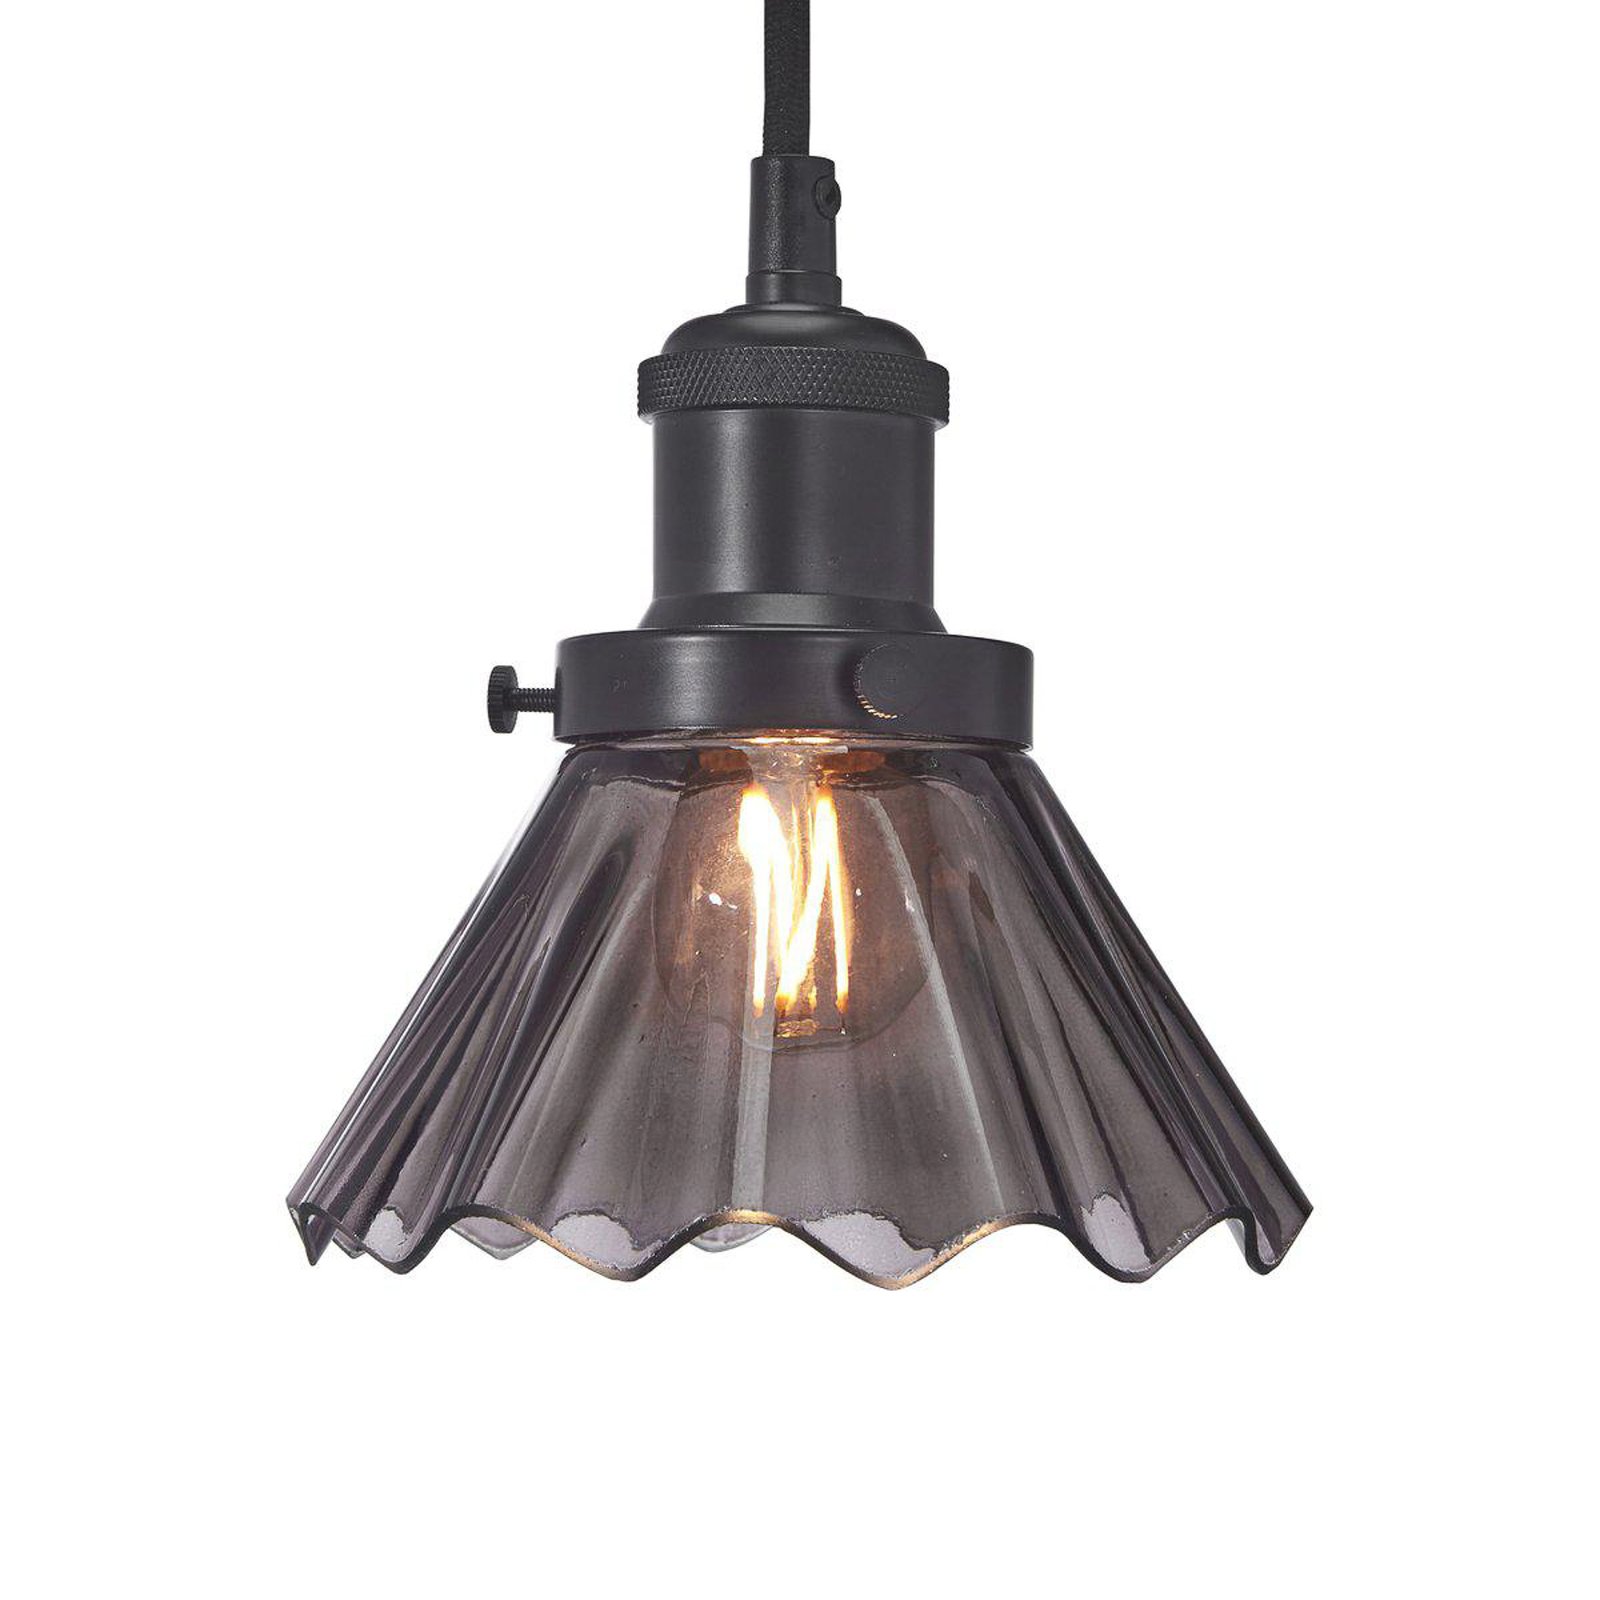 PR Home hanglamp August, zwart, Ø 15 cm, gegolfd glas